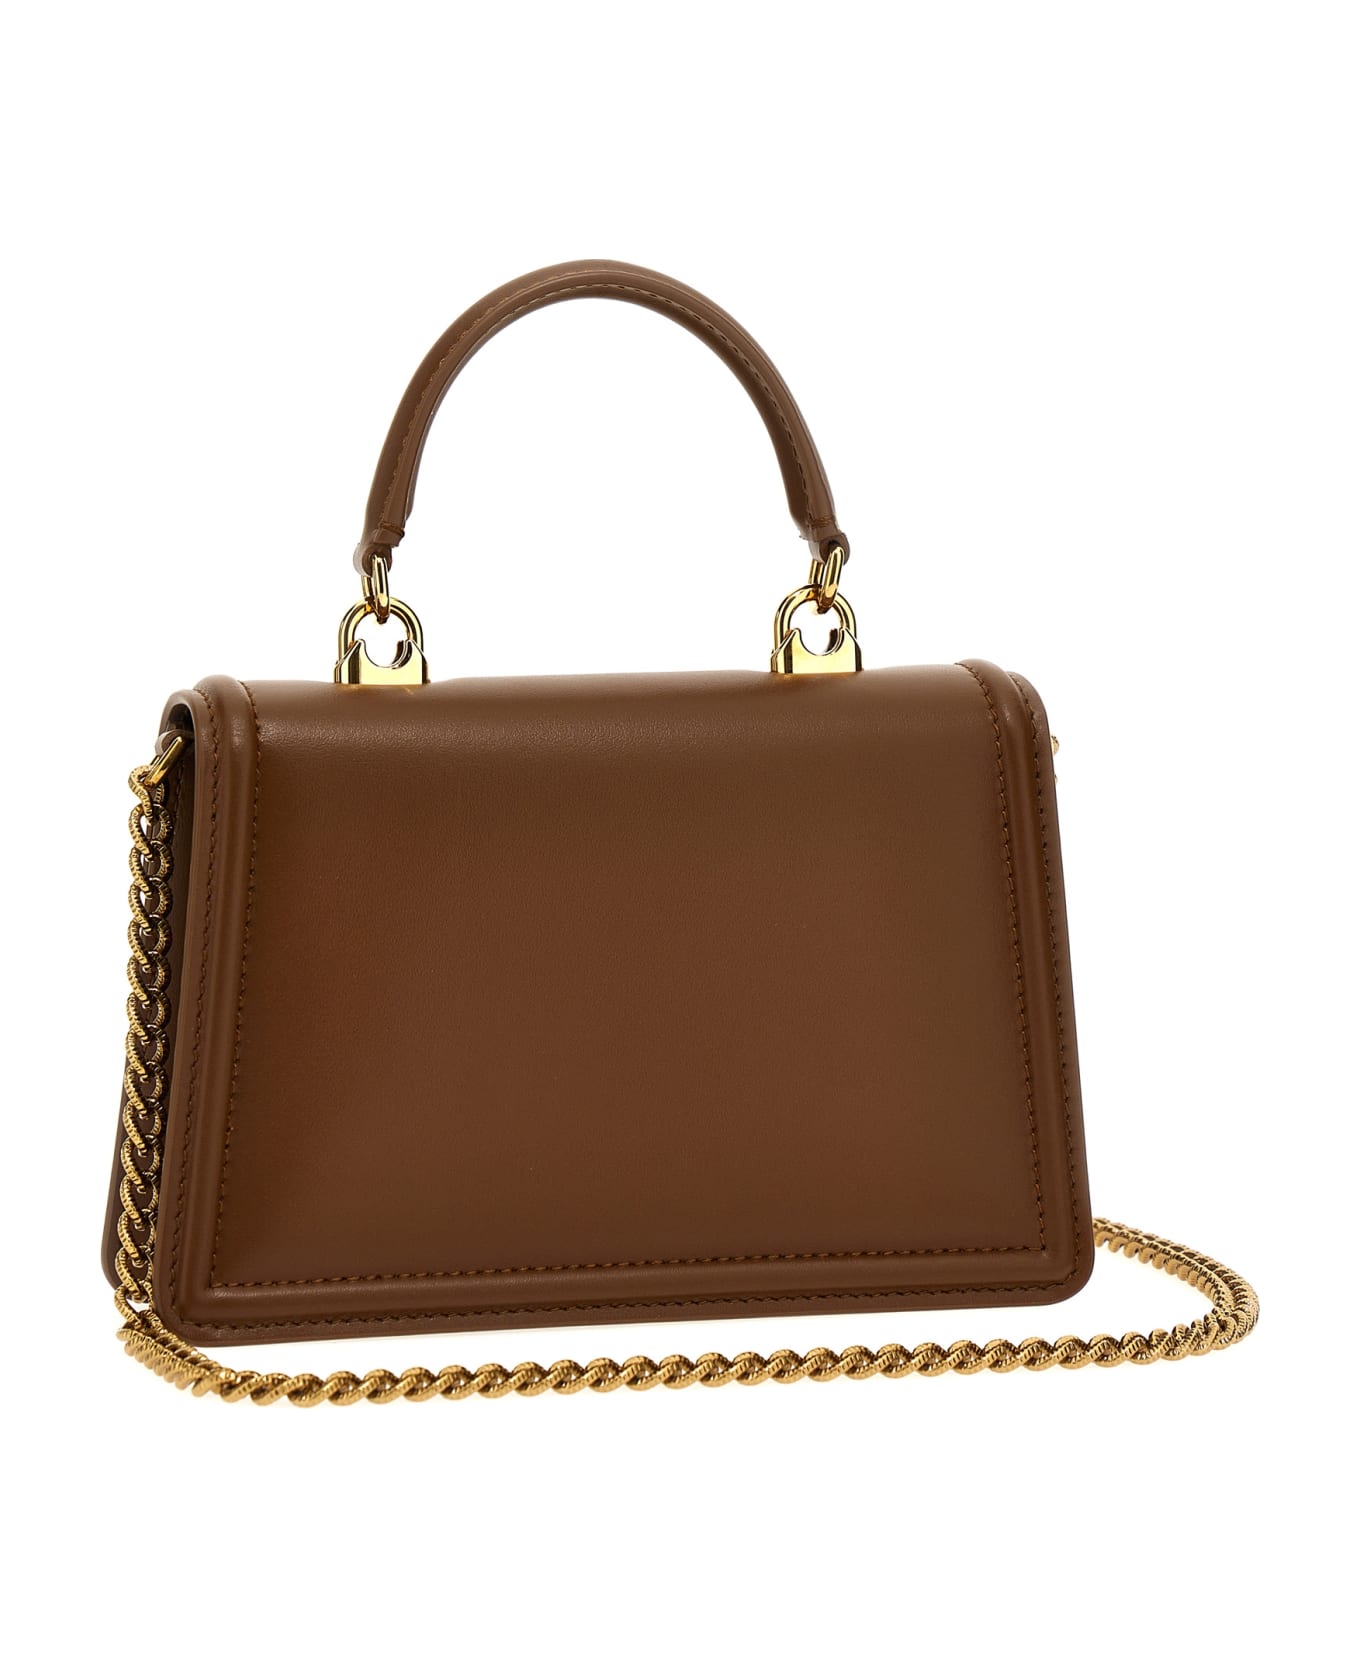 Dolce & Gabbana Devotion Bag - Brown トートバッグ